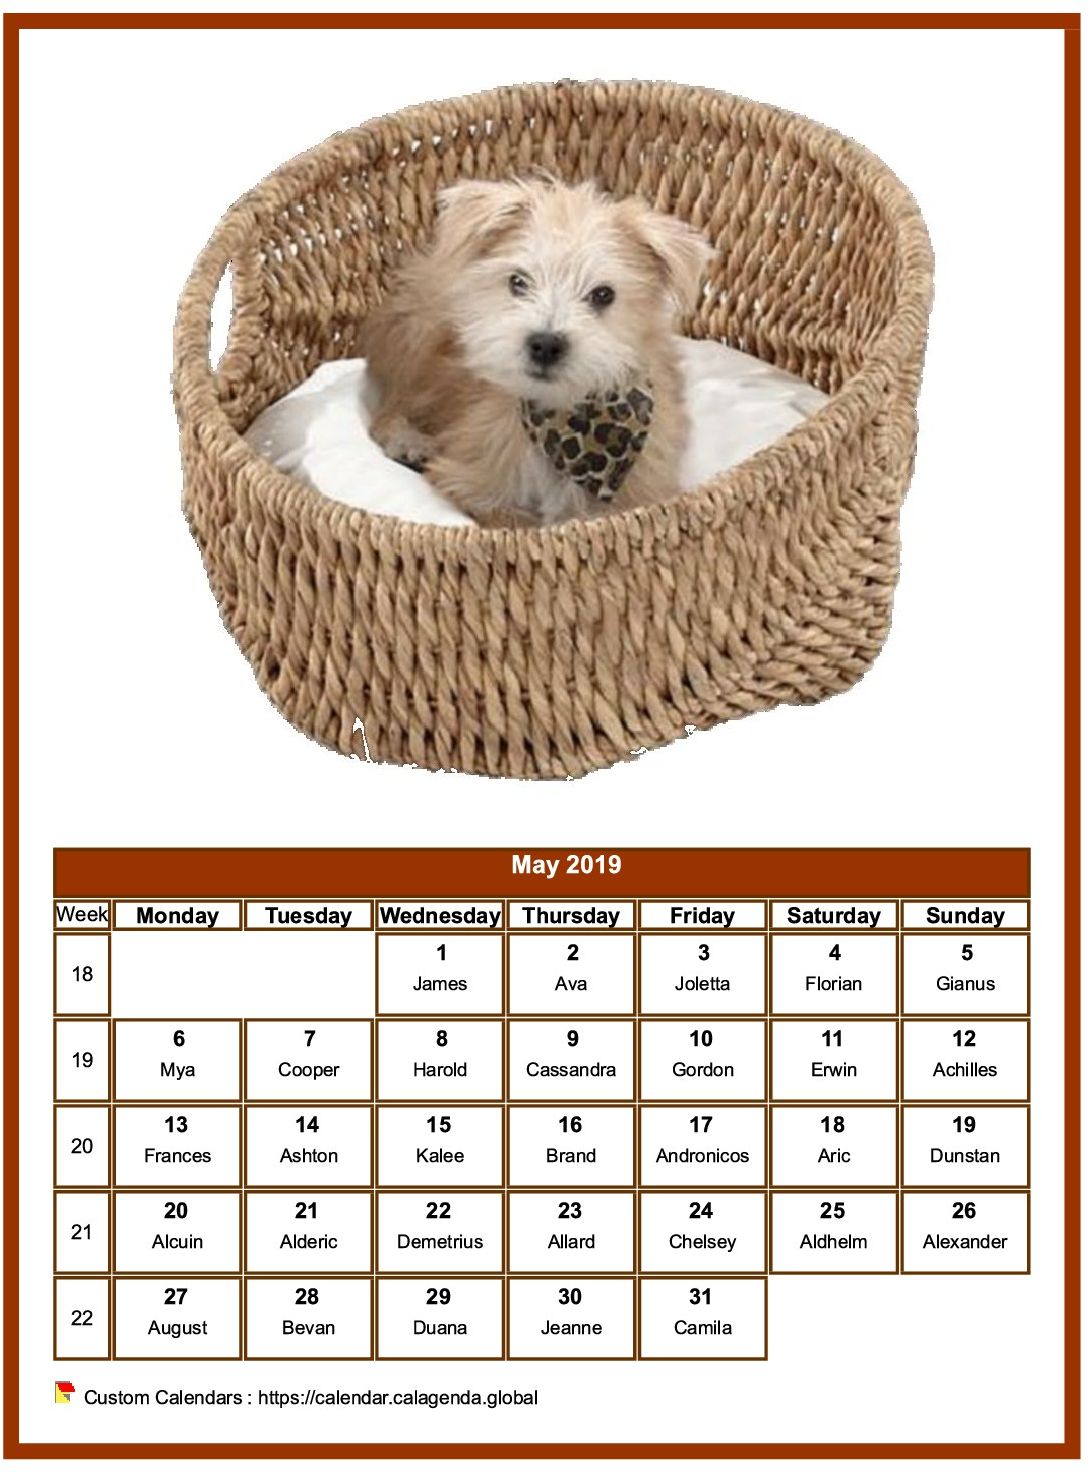 Calendar May 2019 dogs